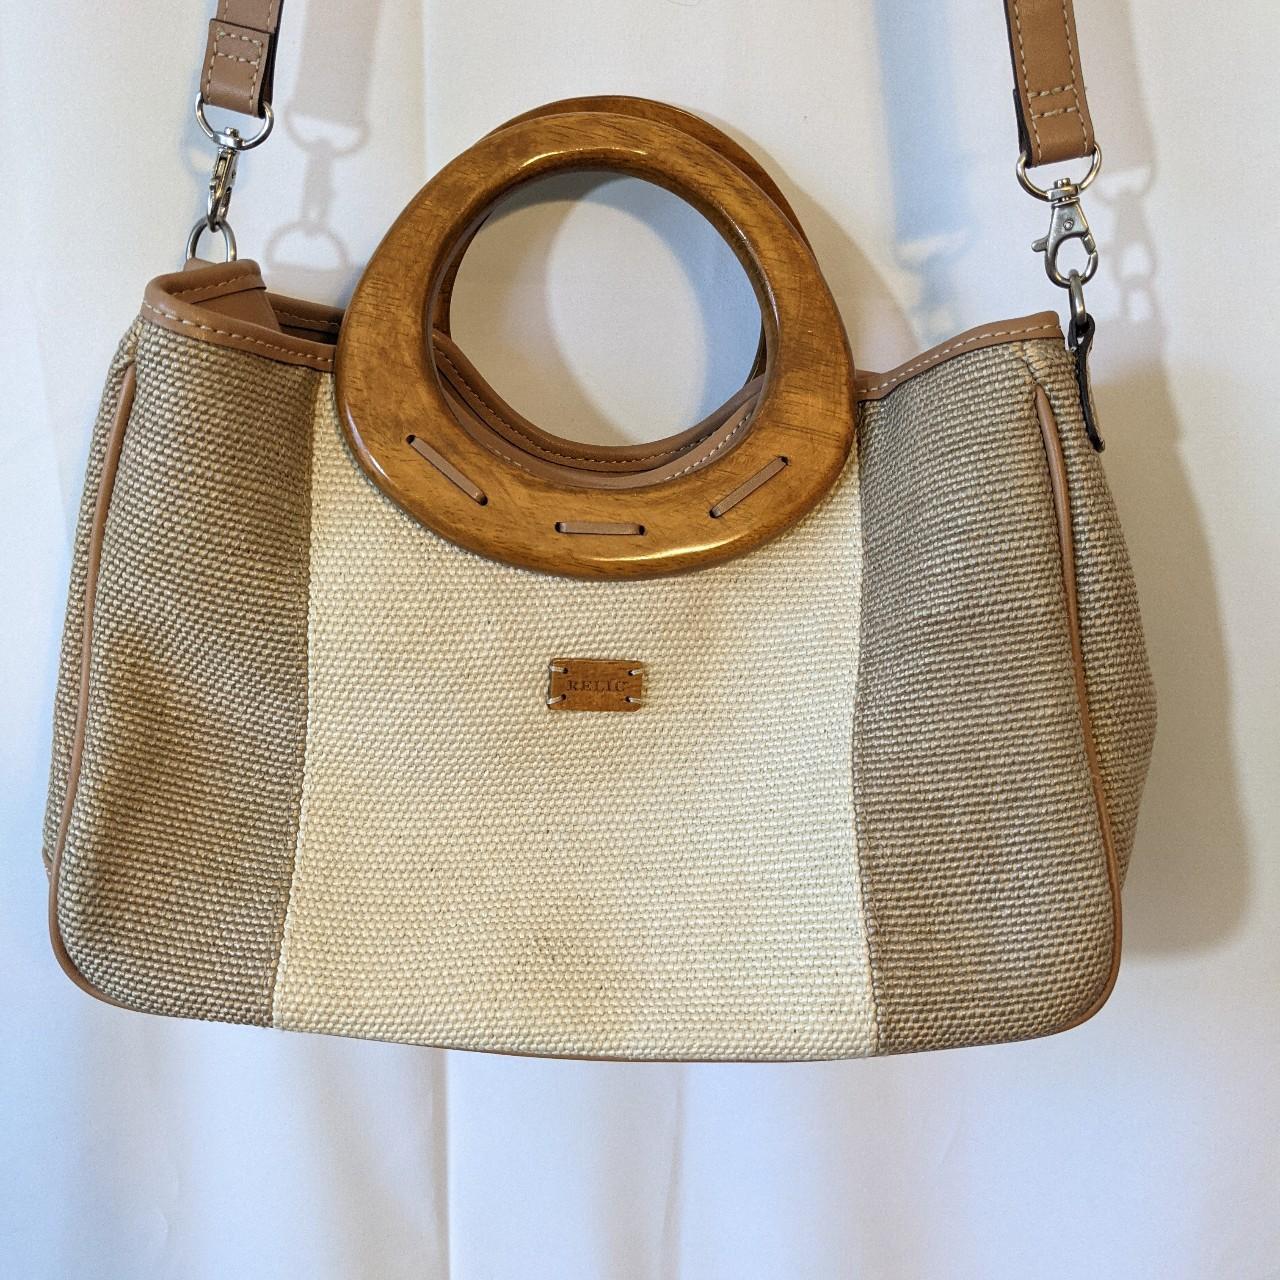 Relic Handbag Tan and Brown Leather Shoulder Bag Purse Handbag | Tan  handbags, Leather, Relic handbags